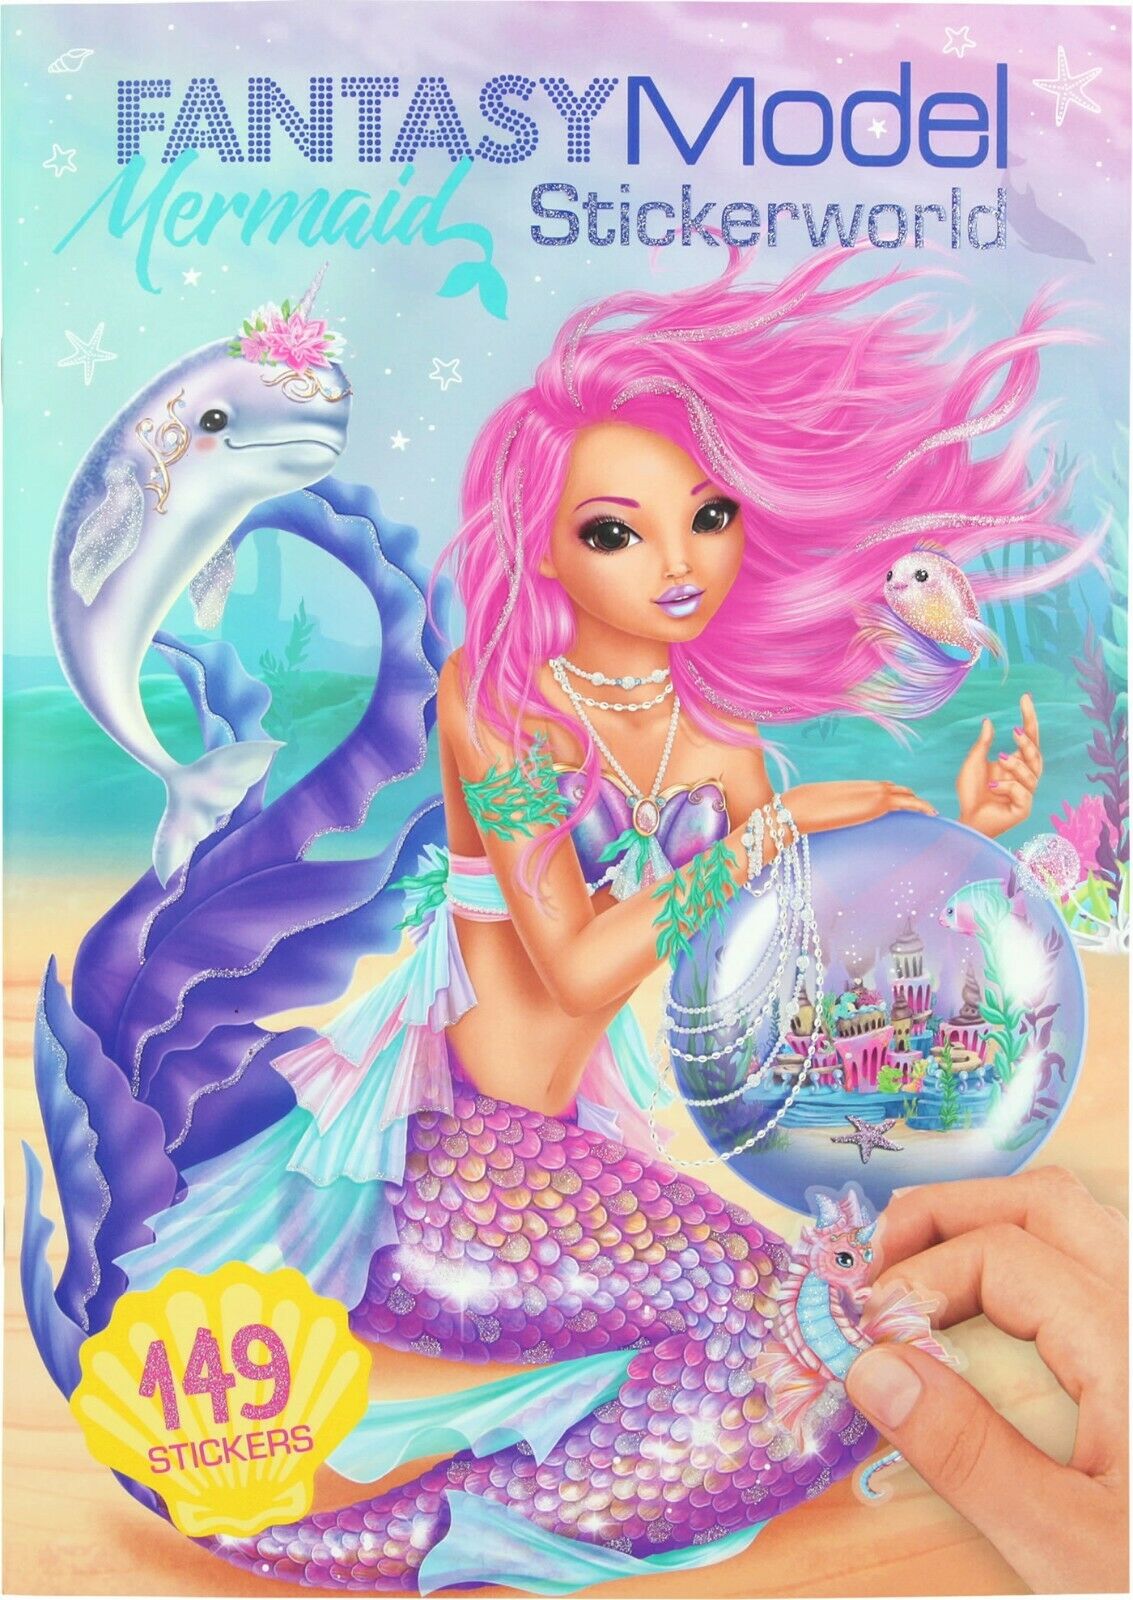 Top Model - Fantasy Stickerworld - Mermaid (0410846)